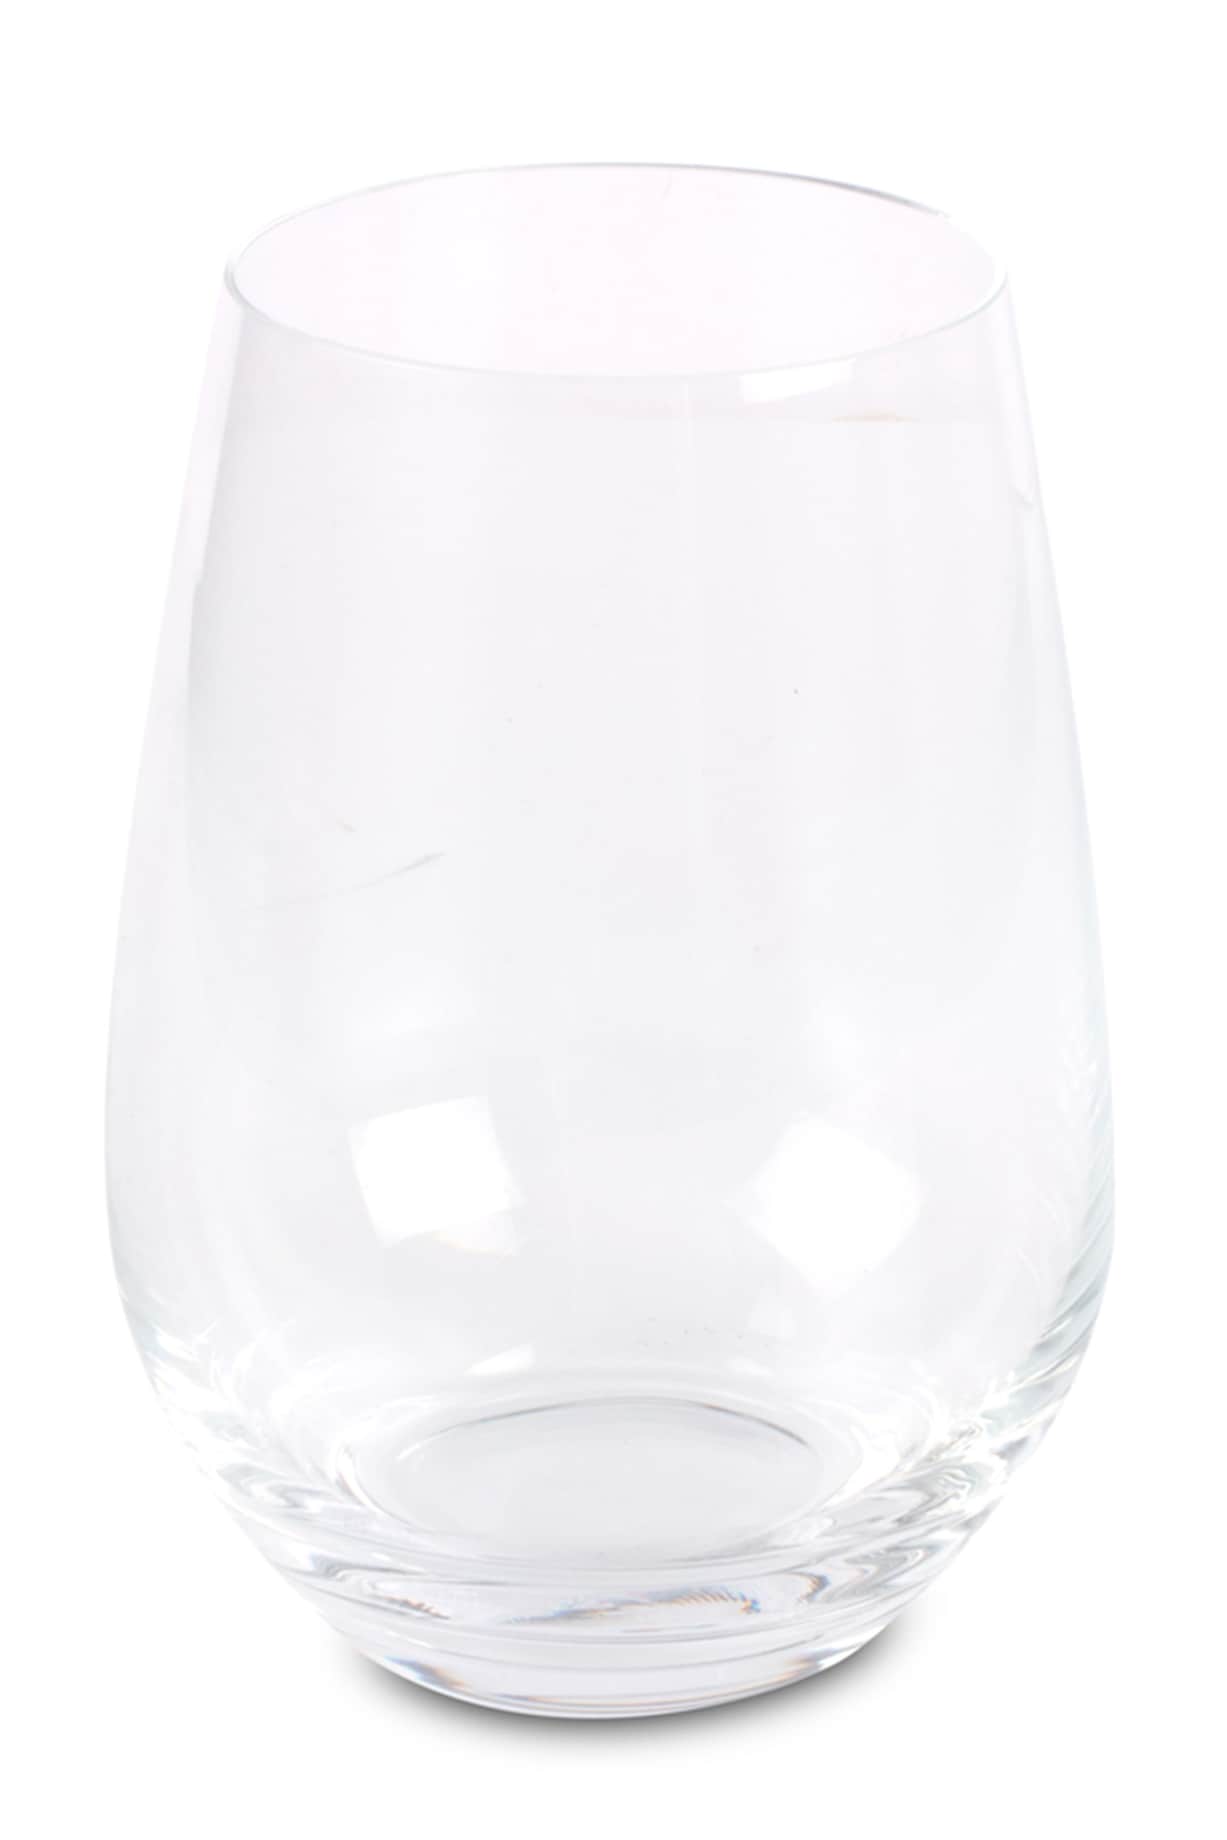 10 oz. Rioja White Wine Glasses – Swag My Gear